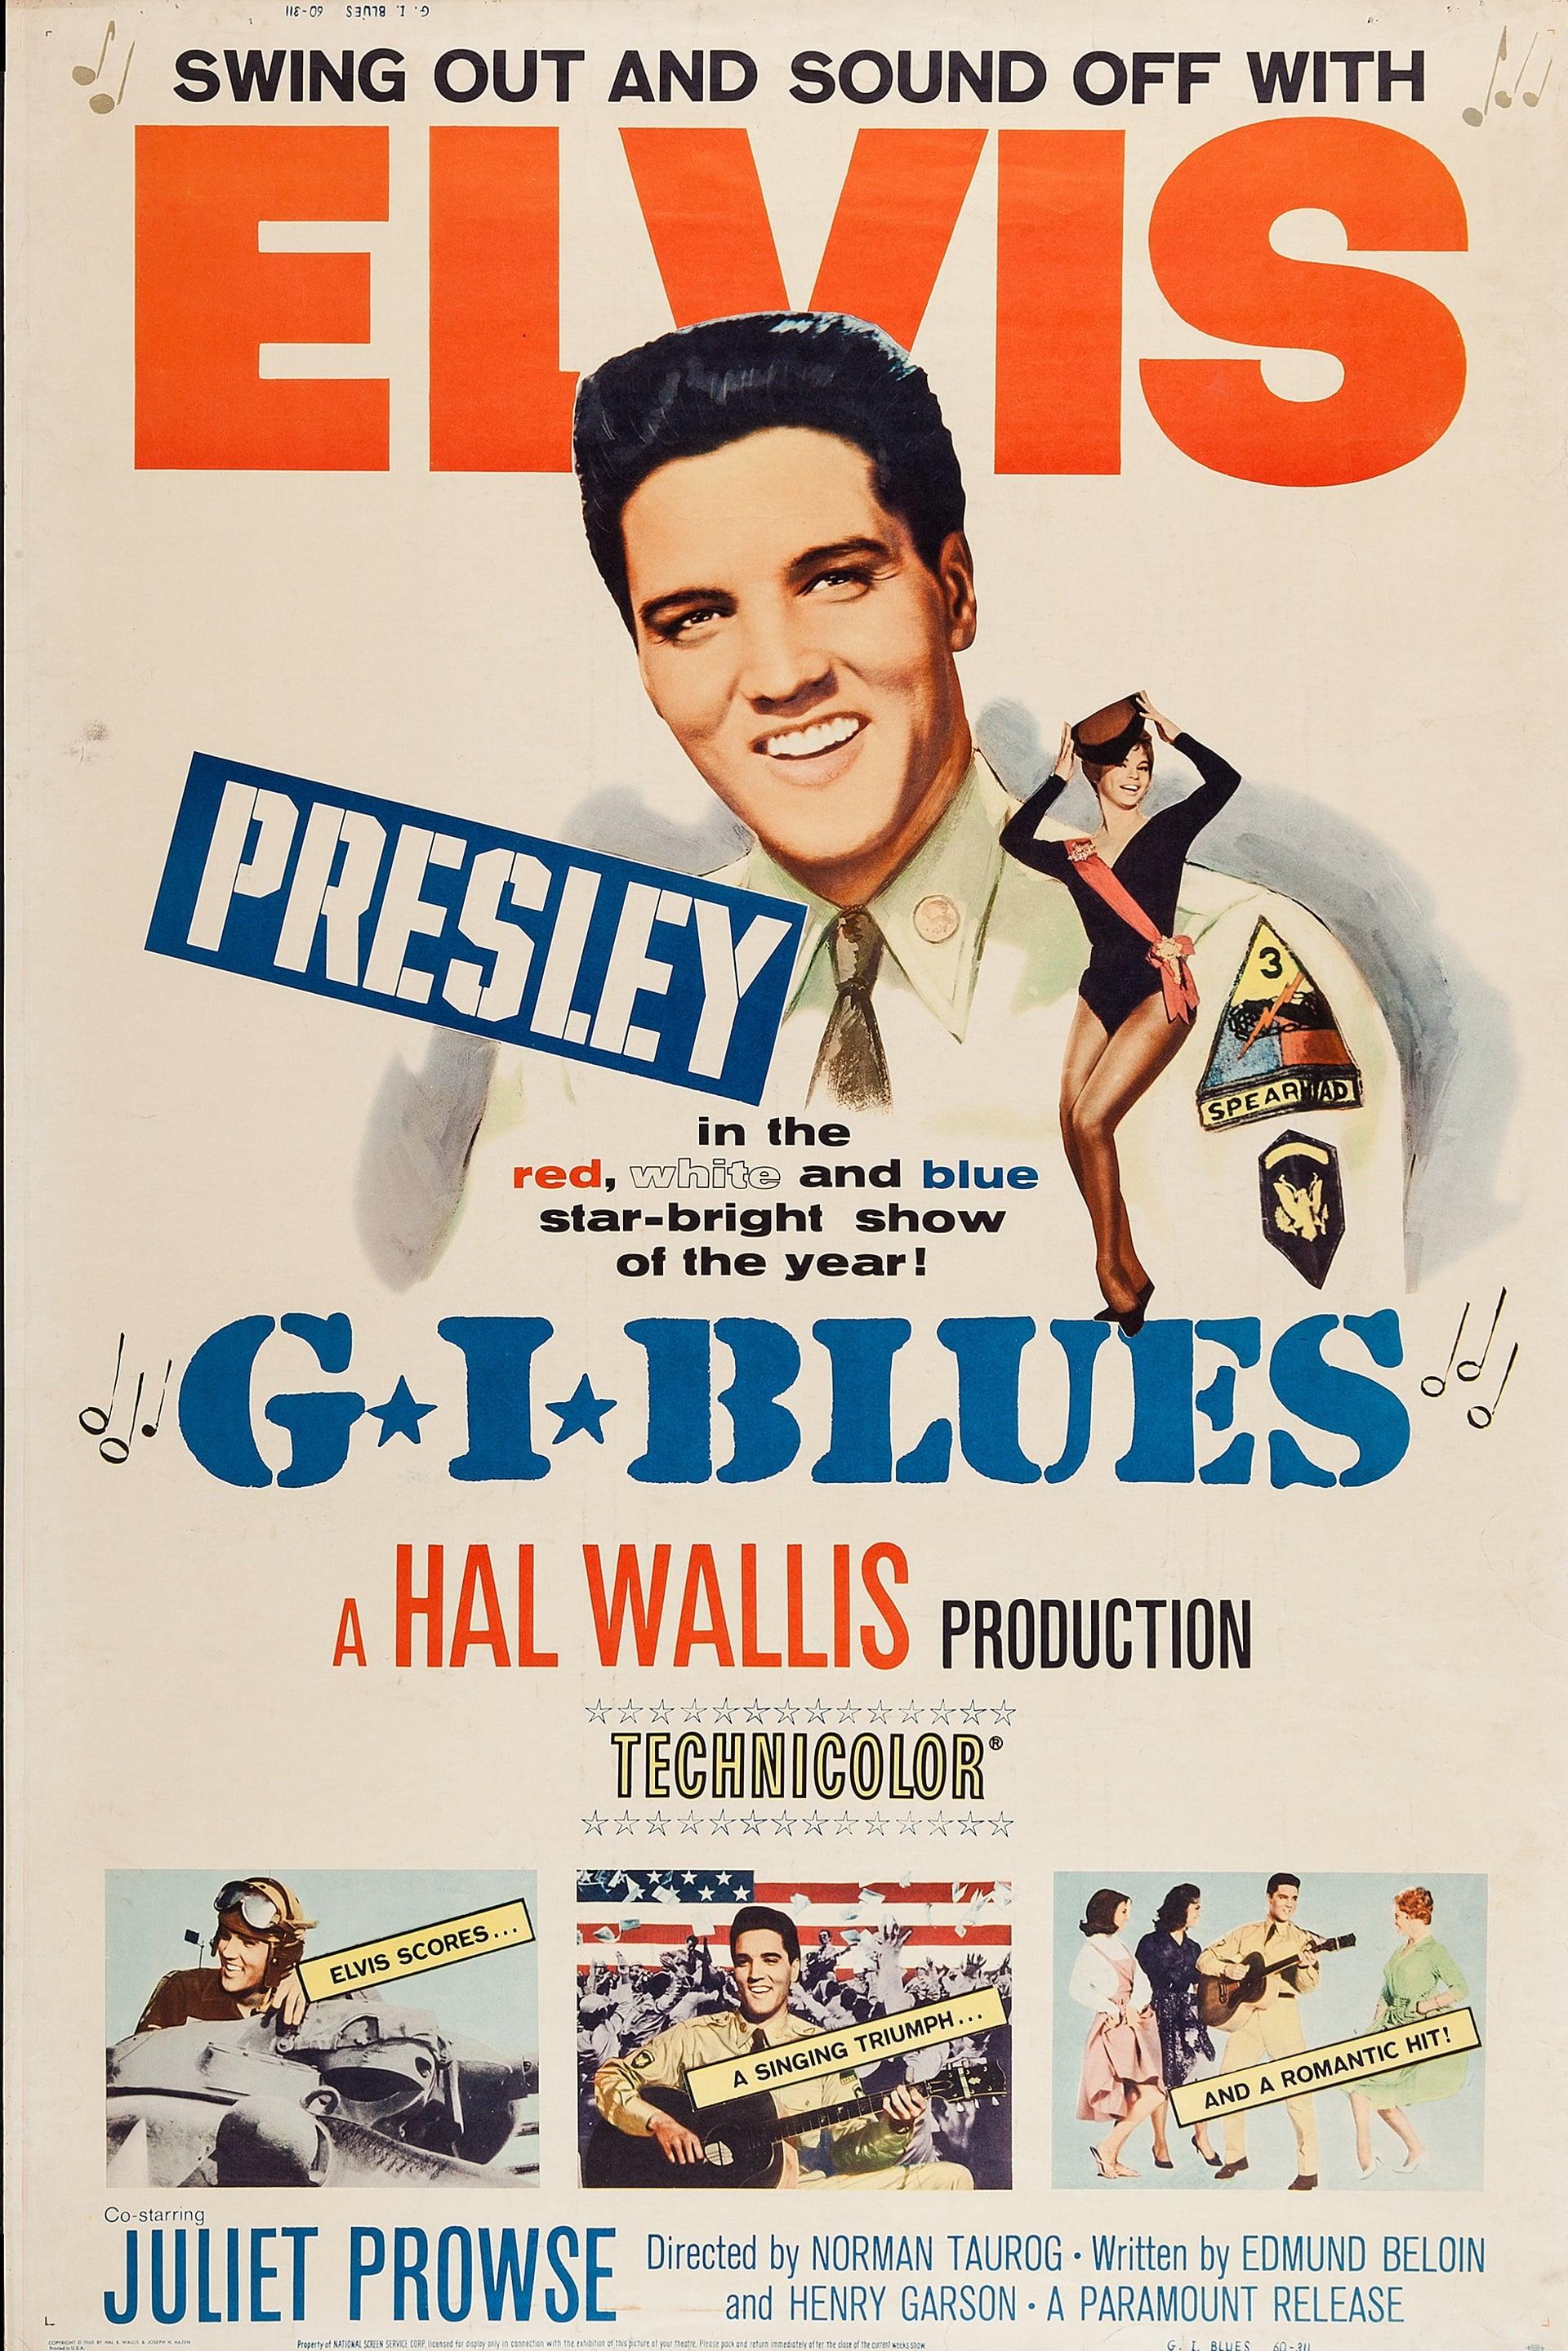 G.I. Blues poster